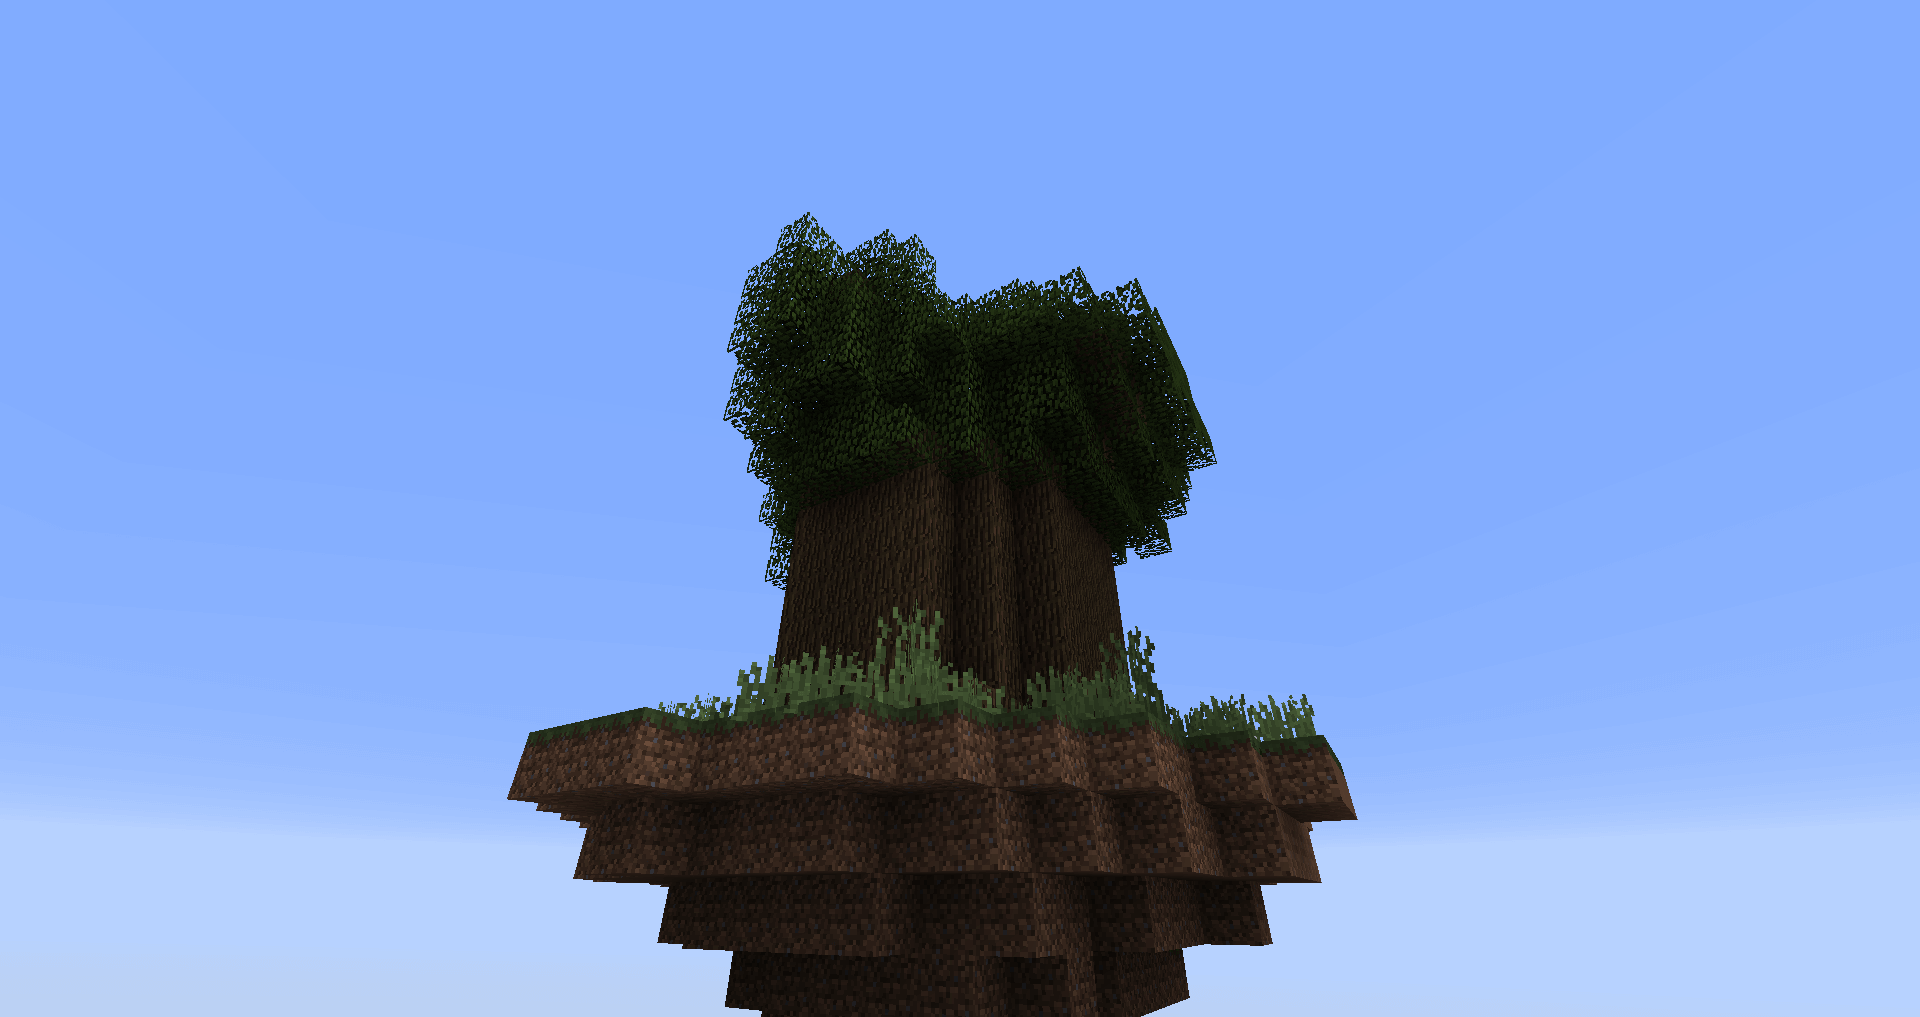 Flying tree. Starter House Minecraft World download. Minecraft Flying Eye. Twisting Vines Minecraft.